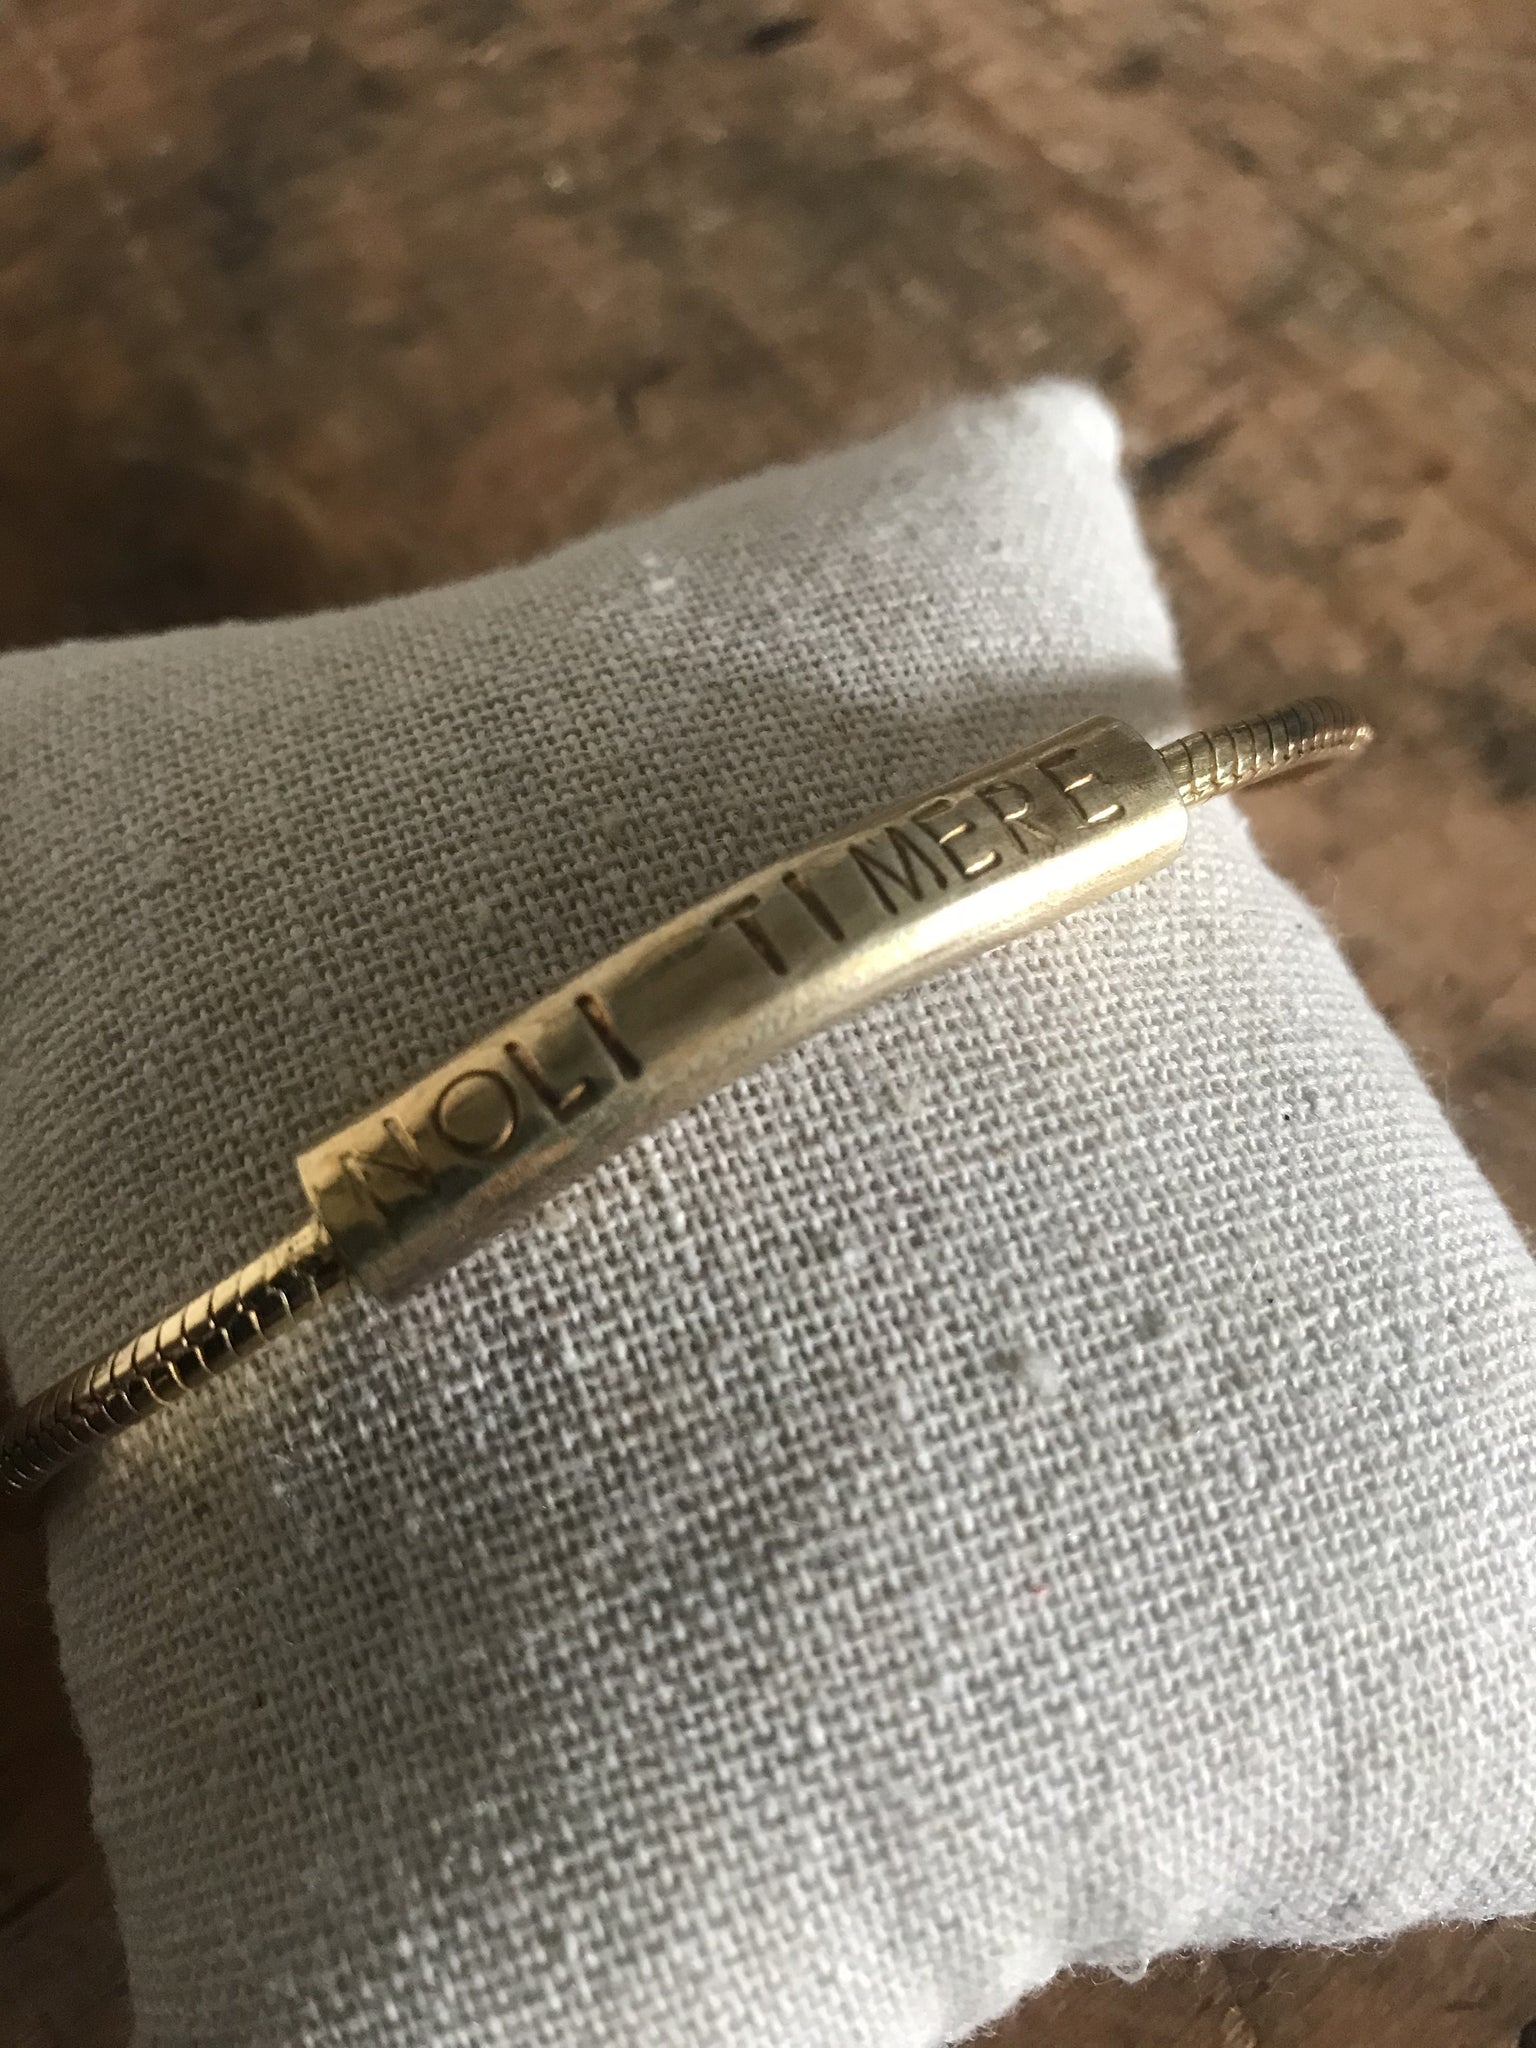 WDTS  NOLI TIMERE snake bracelet - gold